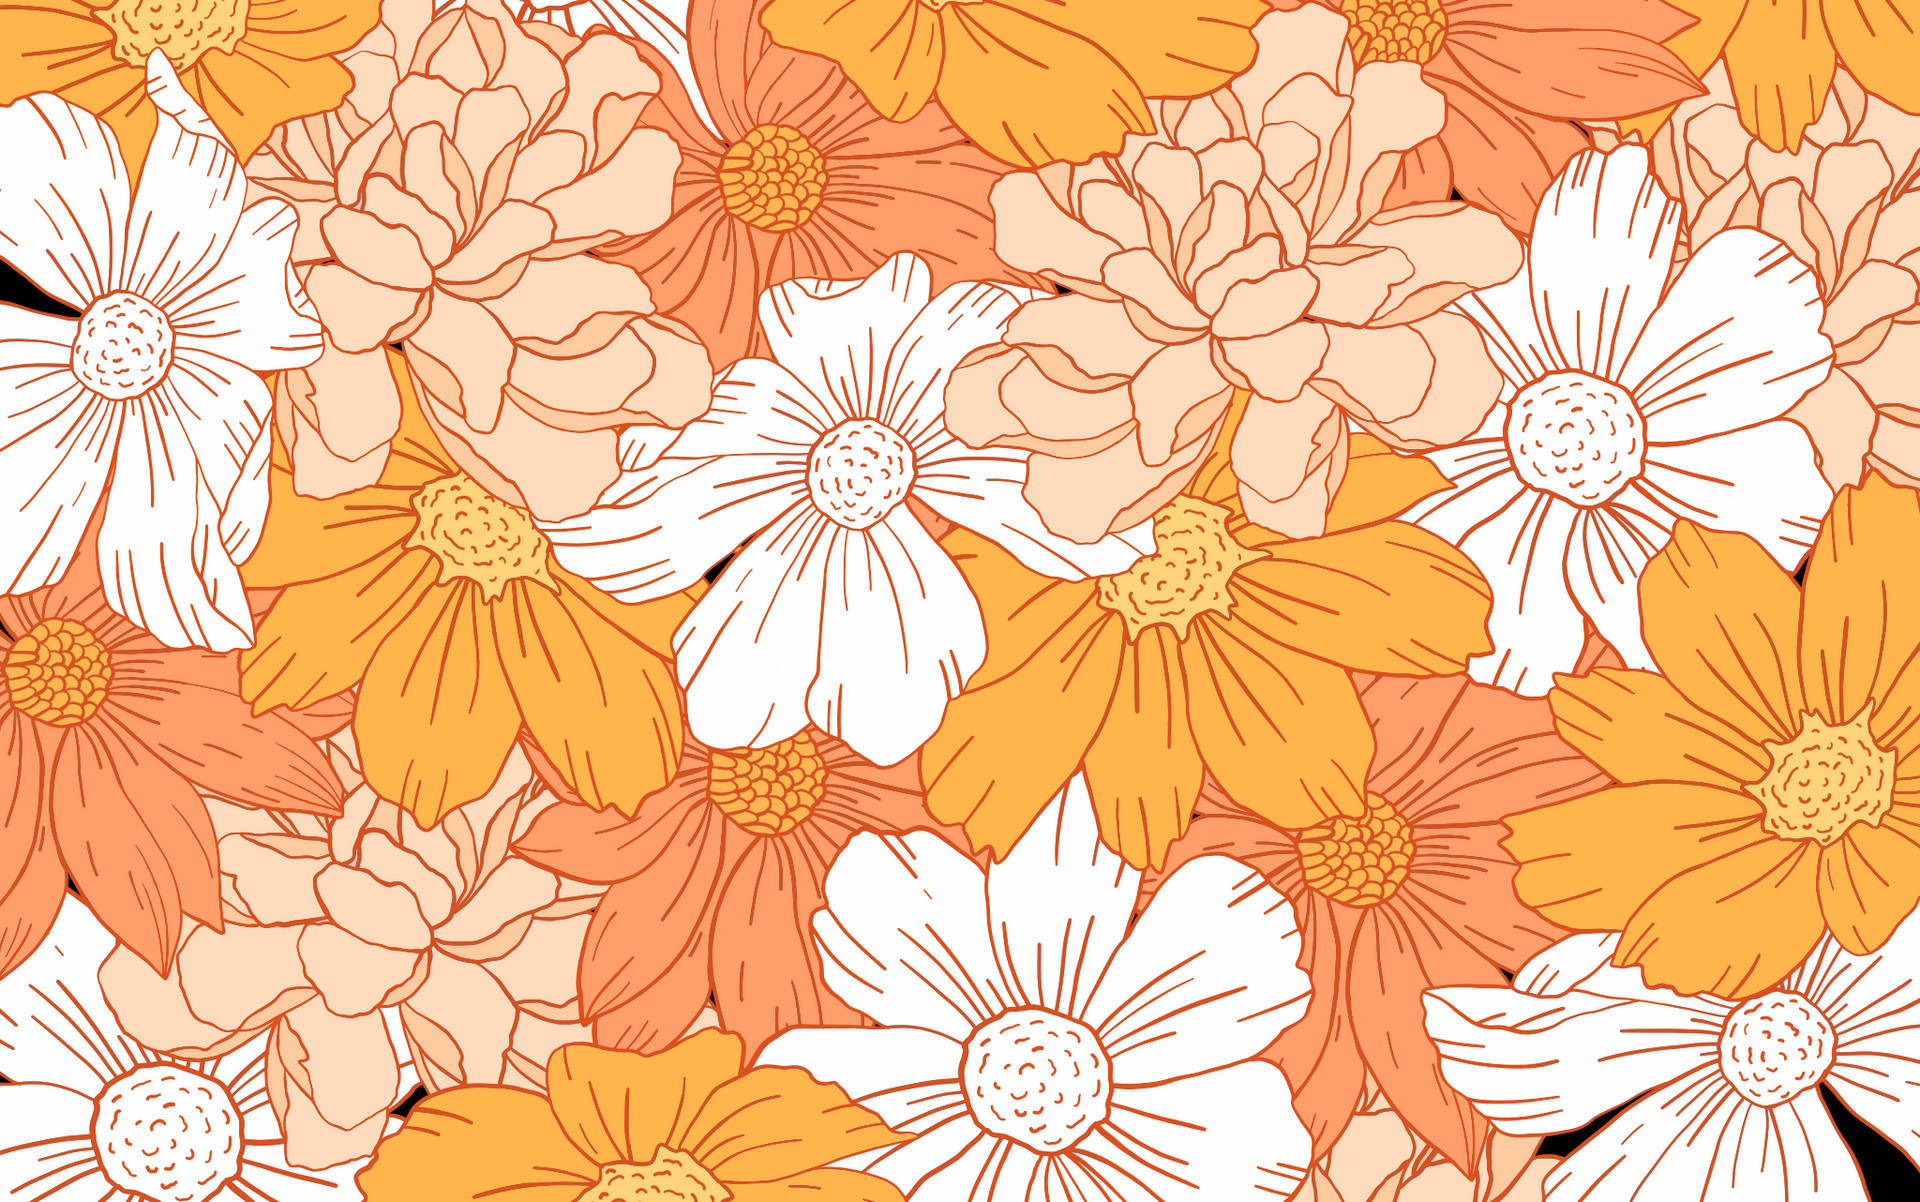 Desktopästhetische Blumenkunst Wallpaper